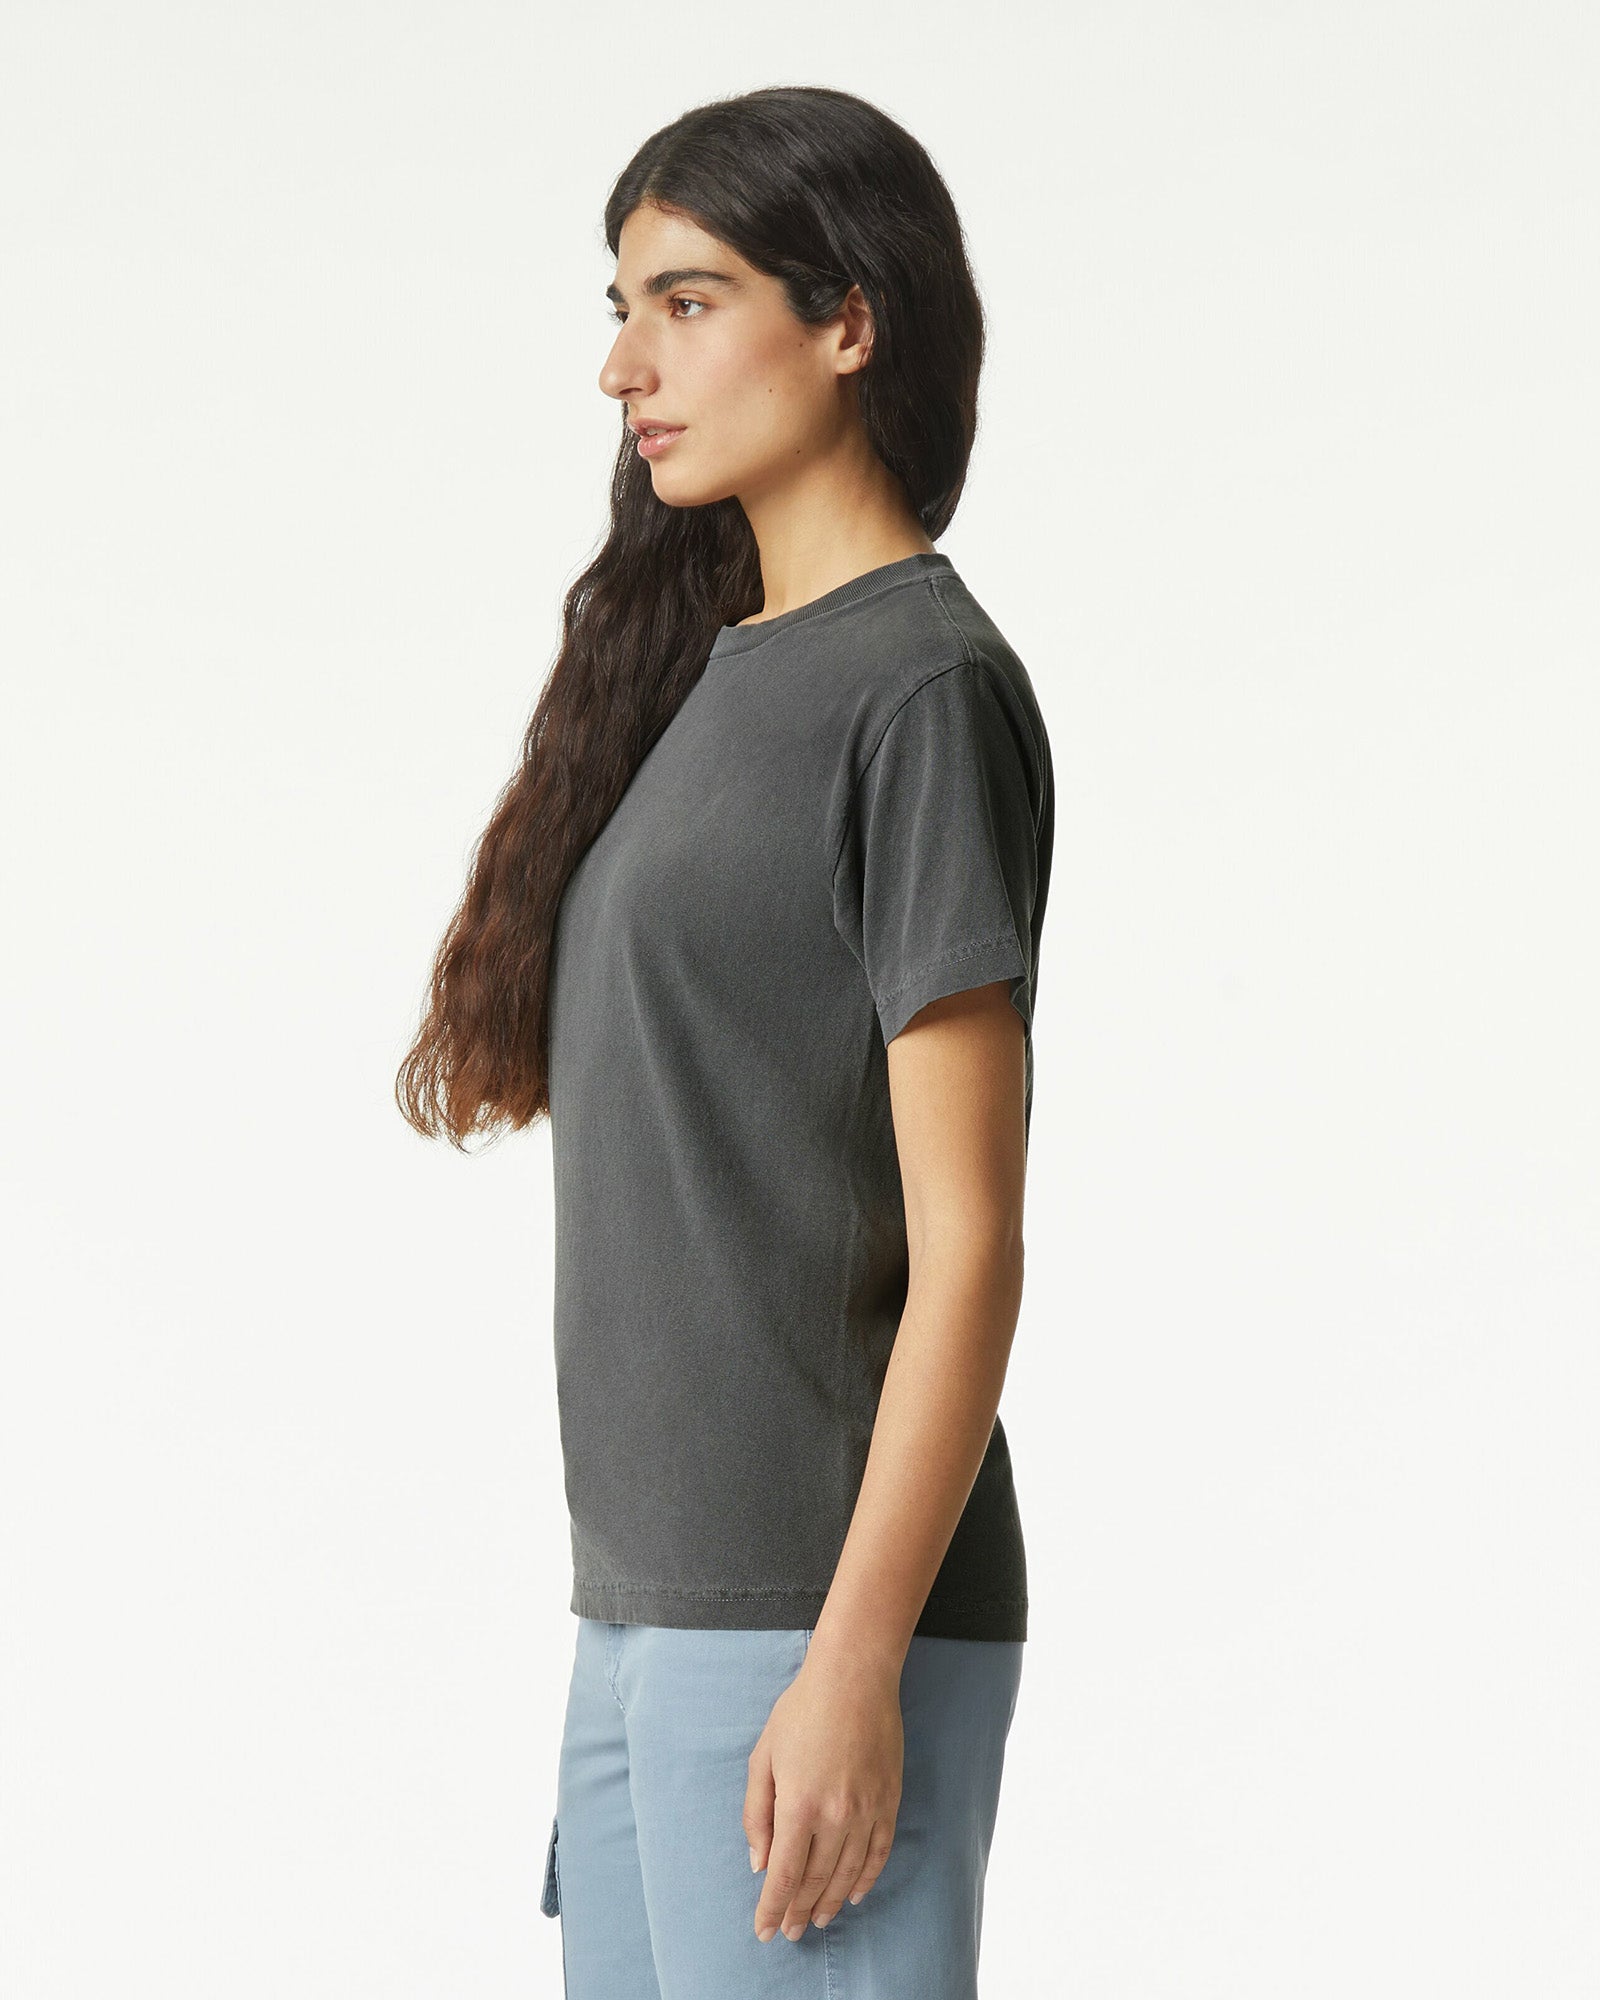 Garment Dyed Heavyweight Unisex T-Shirt - Faded Black